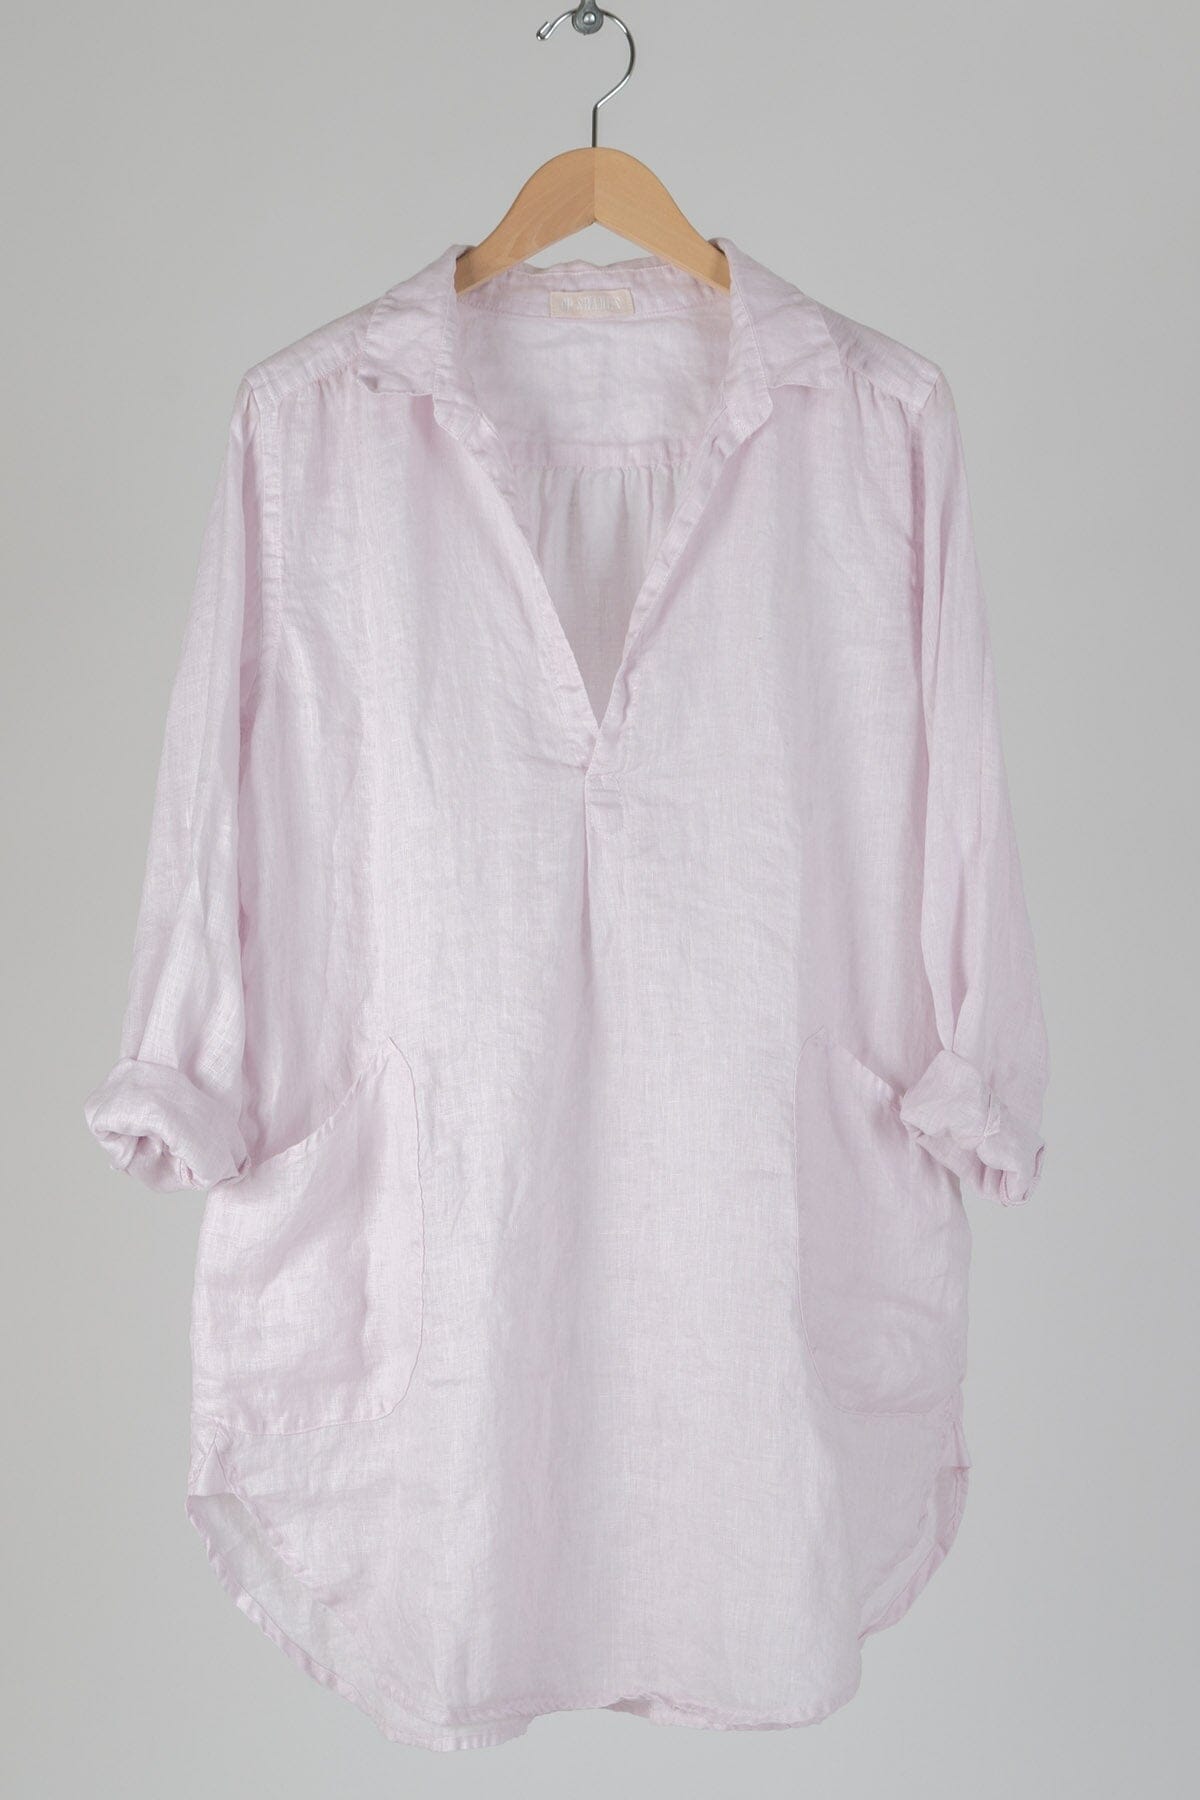 Teton - Linen S10 - Linen Shirt/Top/Tunic CP Shades lavender